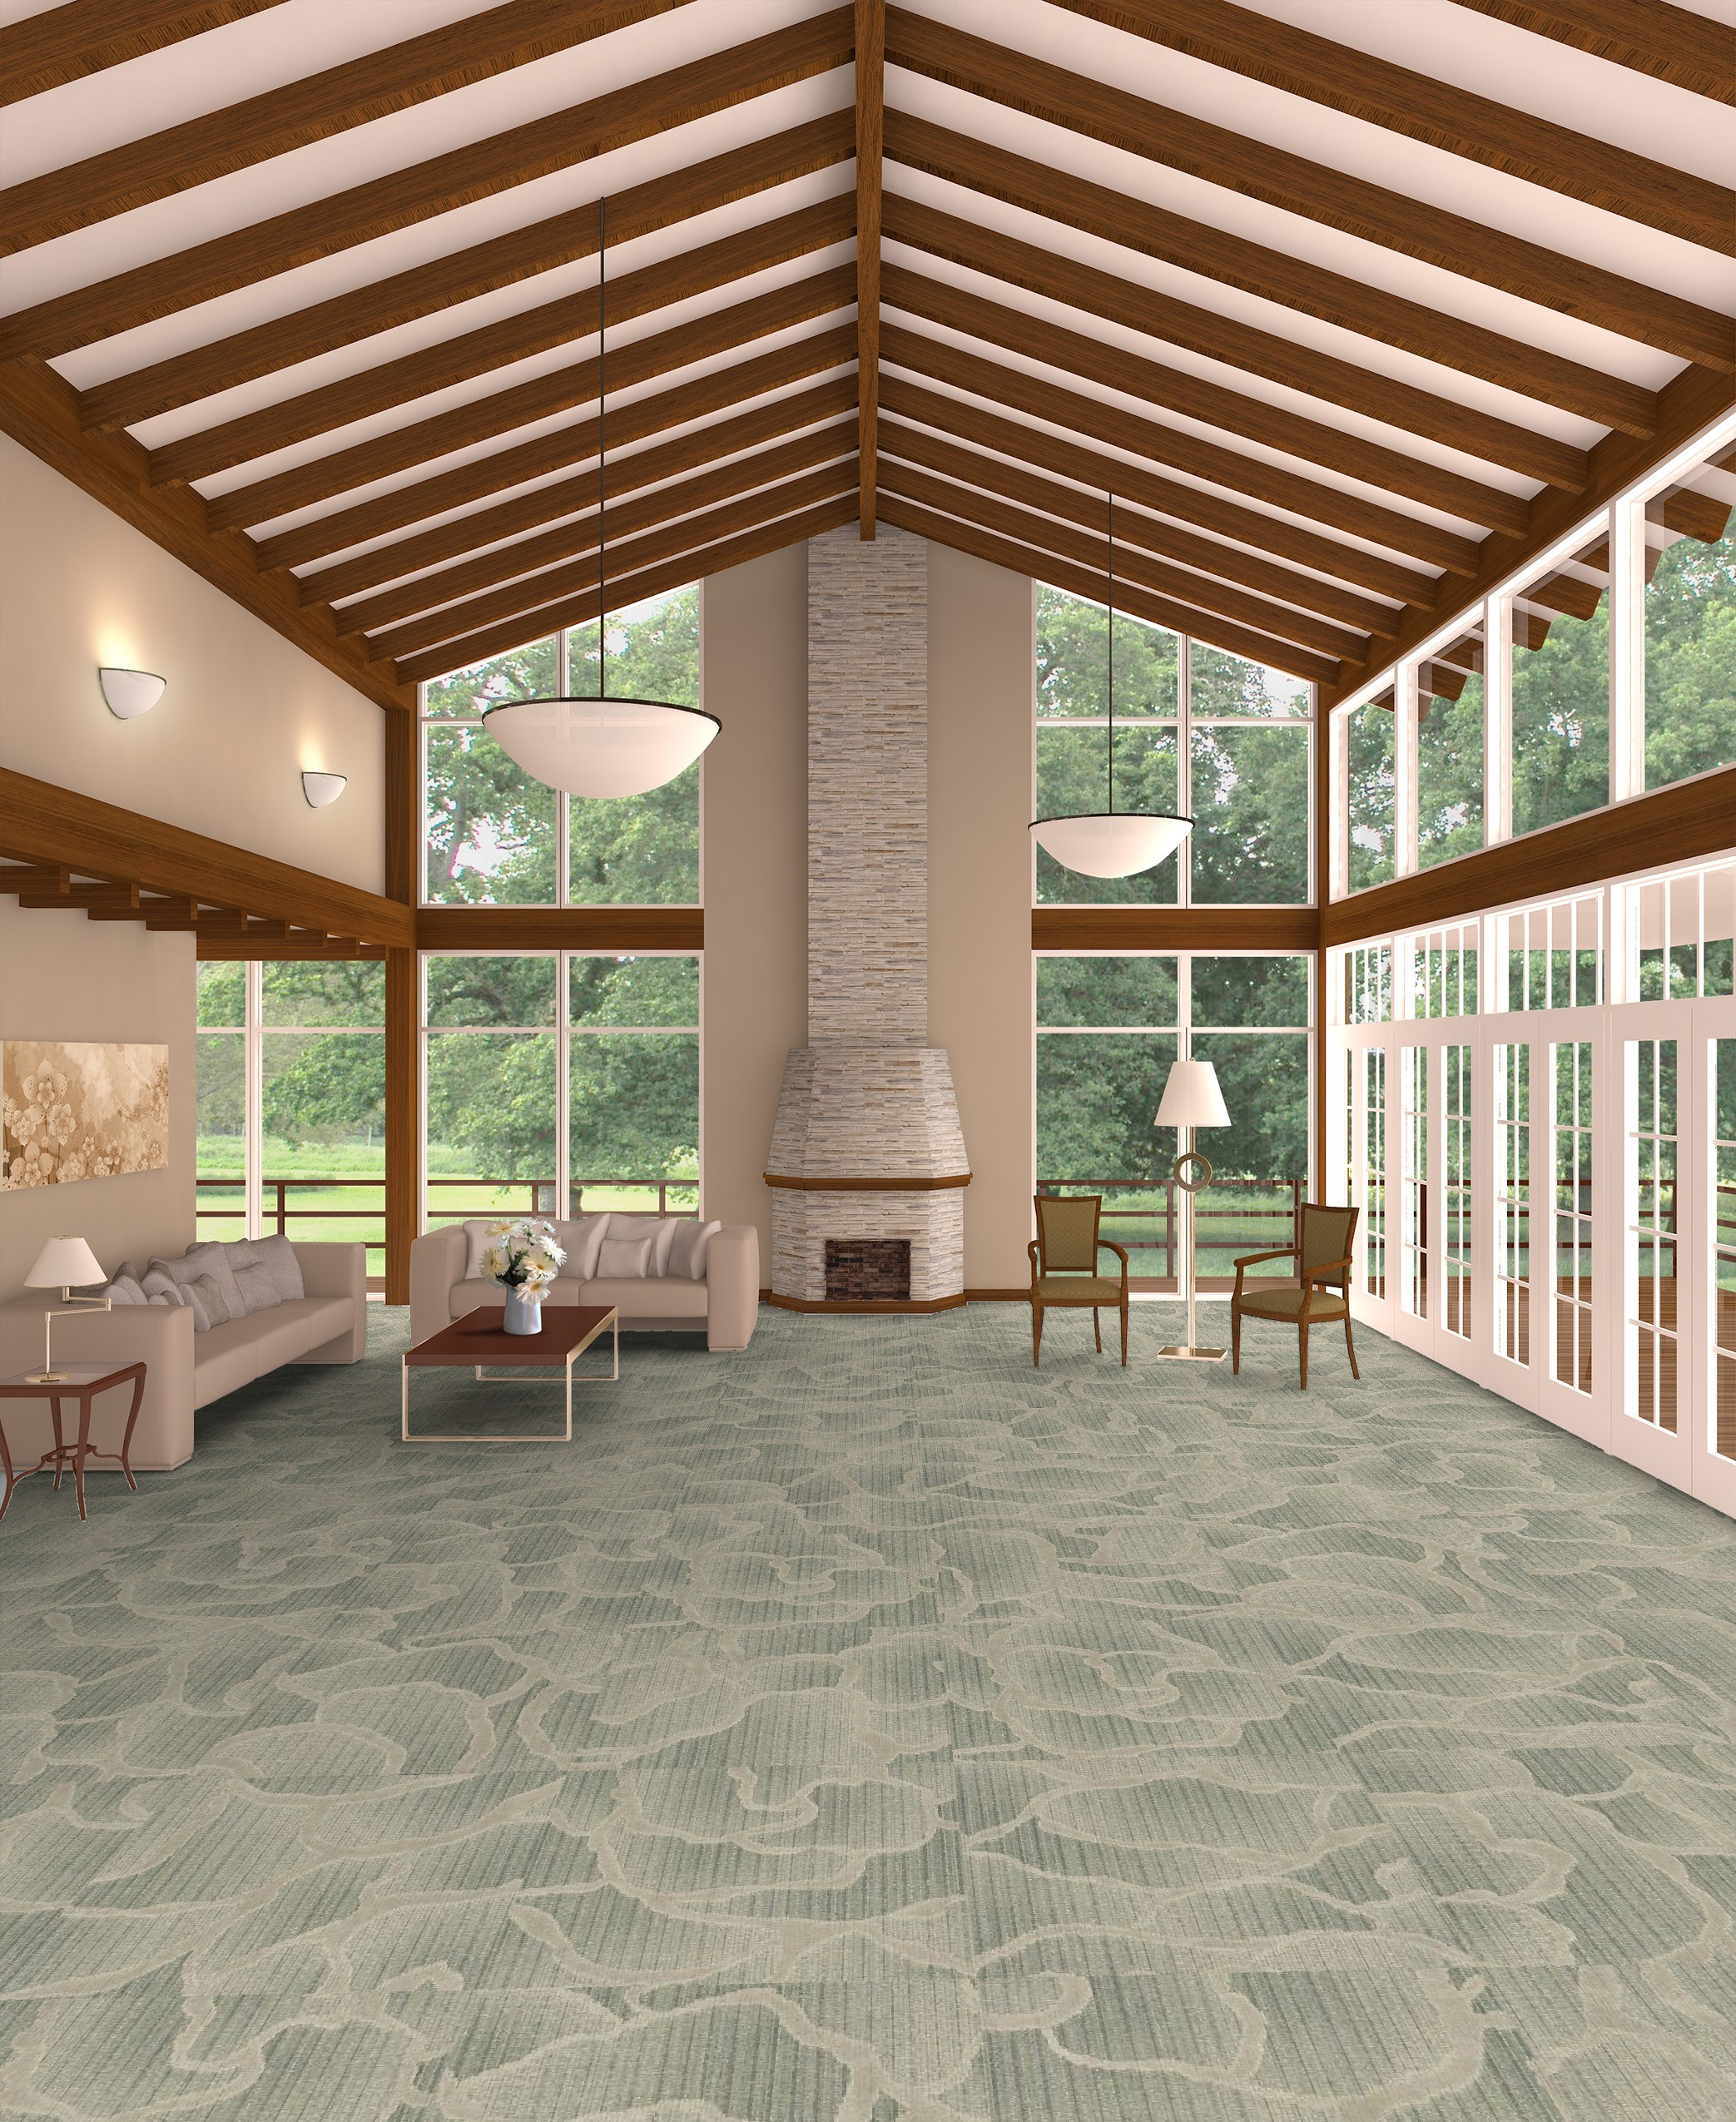 Shaw Botan Carpet Tile Pond Lobby Scene